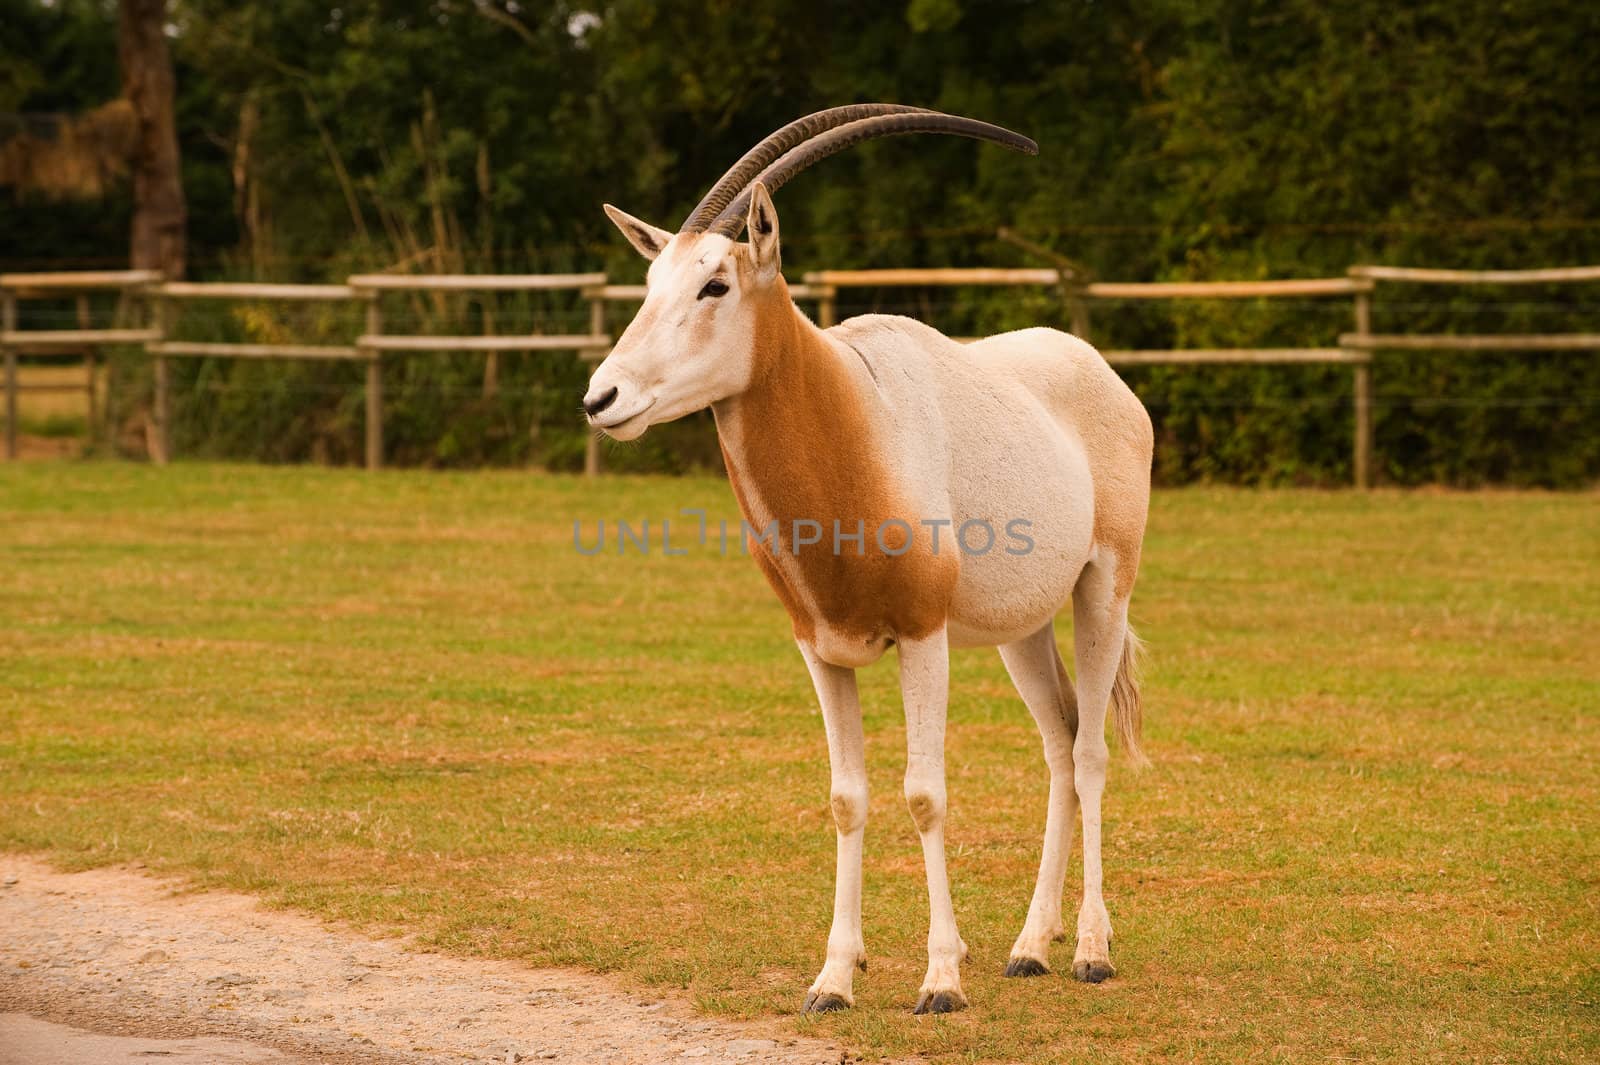 A Single Scimitar Horned Oryx in captivity